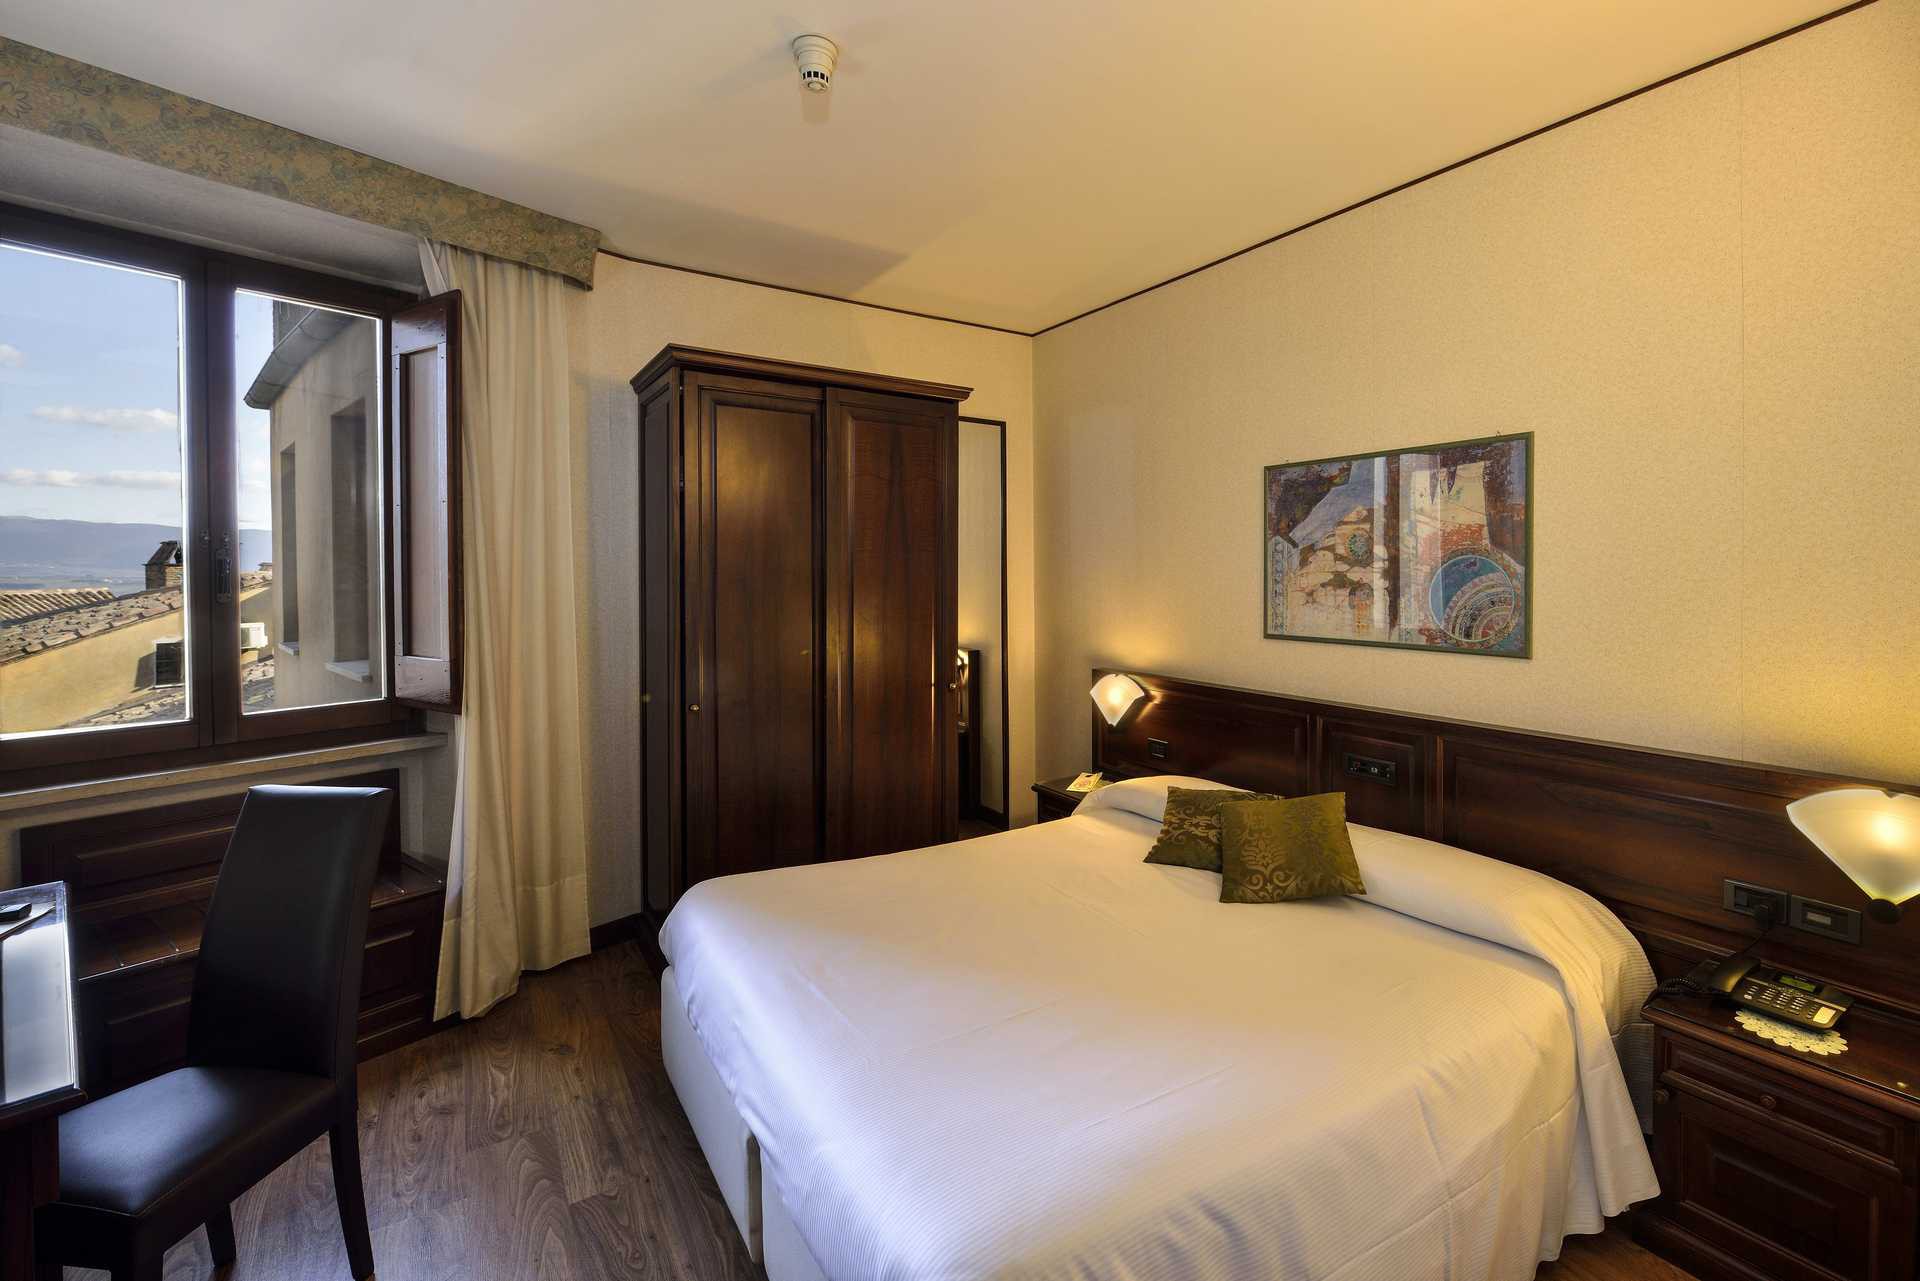 Camera economy - camera basic - Basic room - Hotel Fonte Cesia Todi